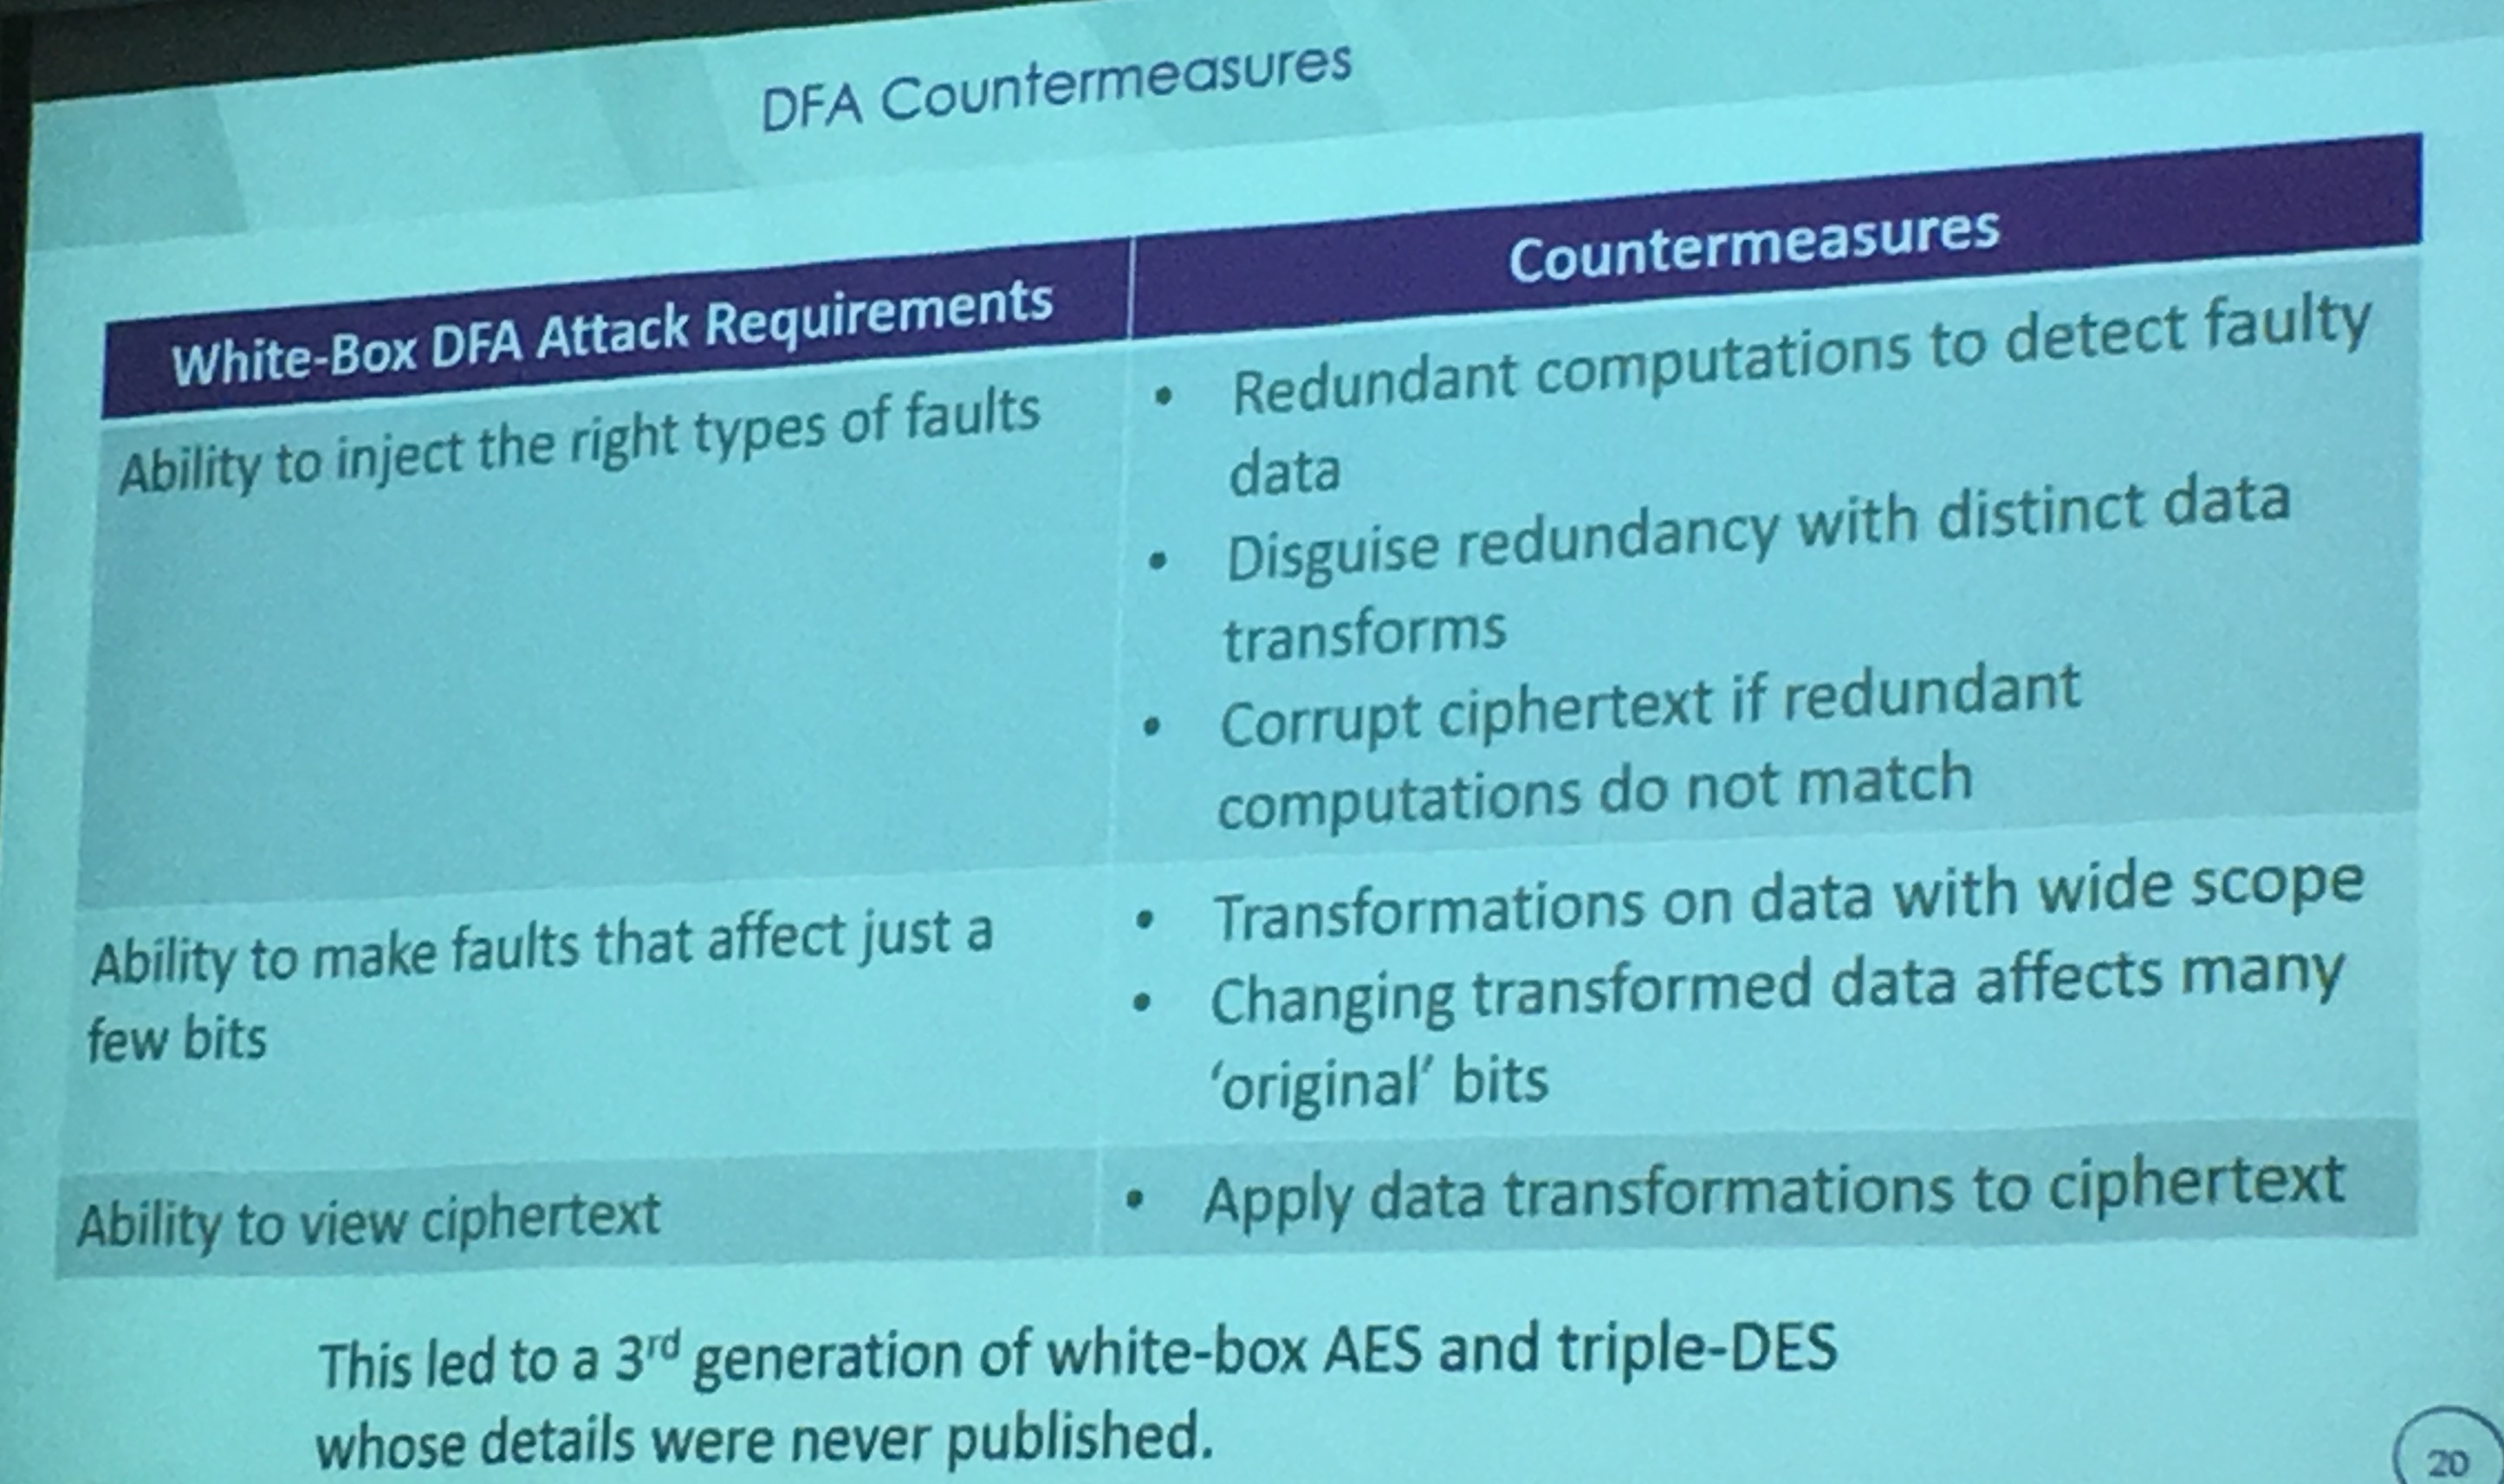 DFA countermeasures